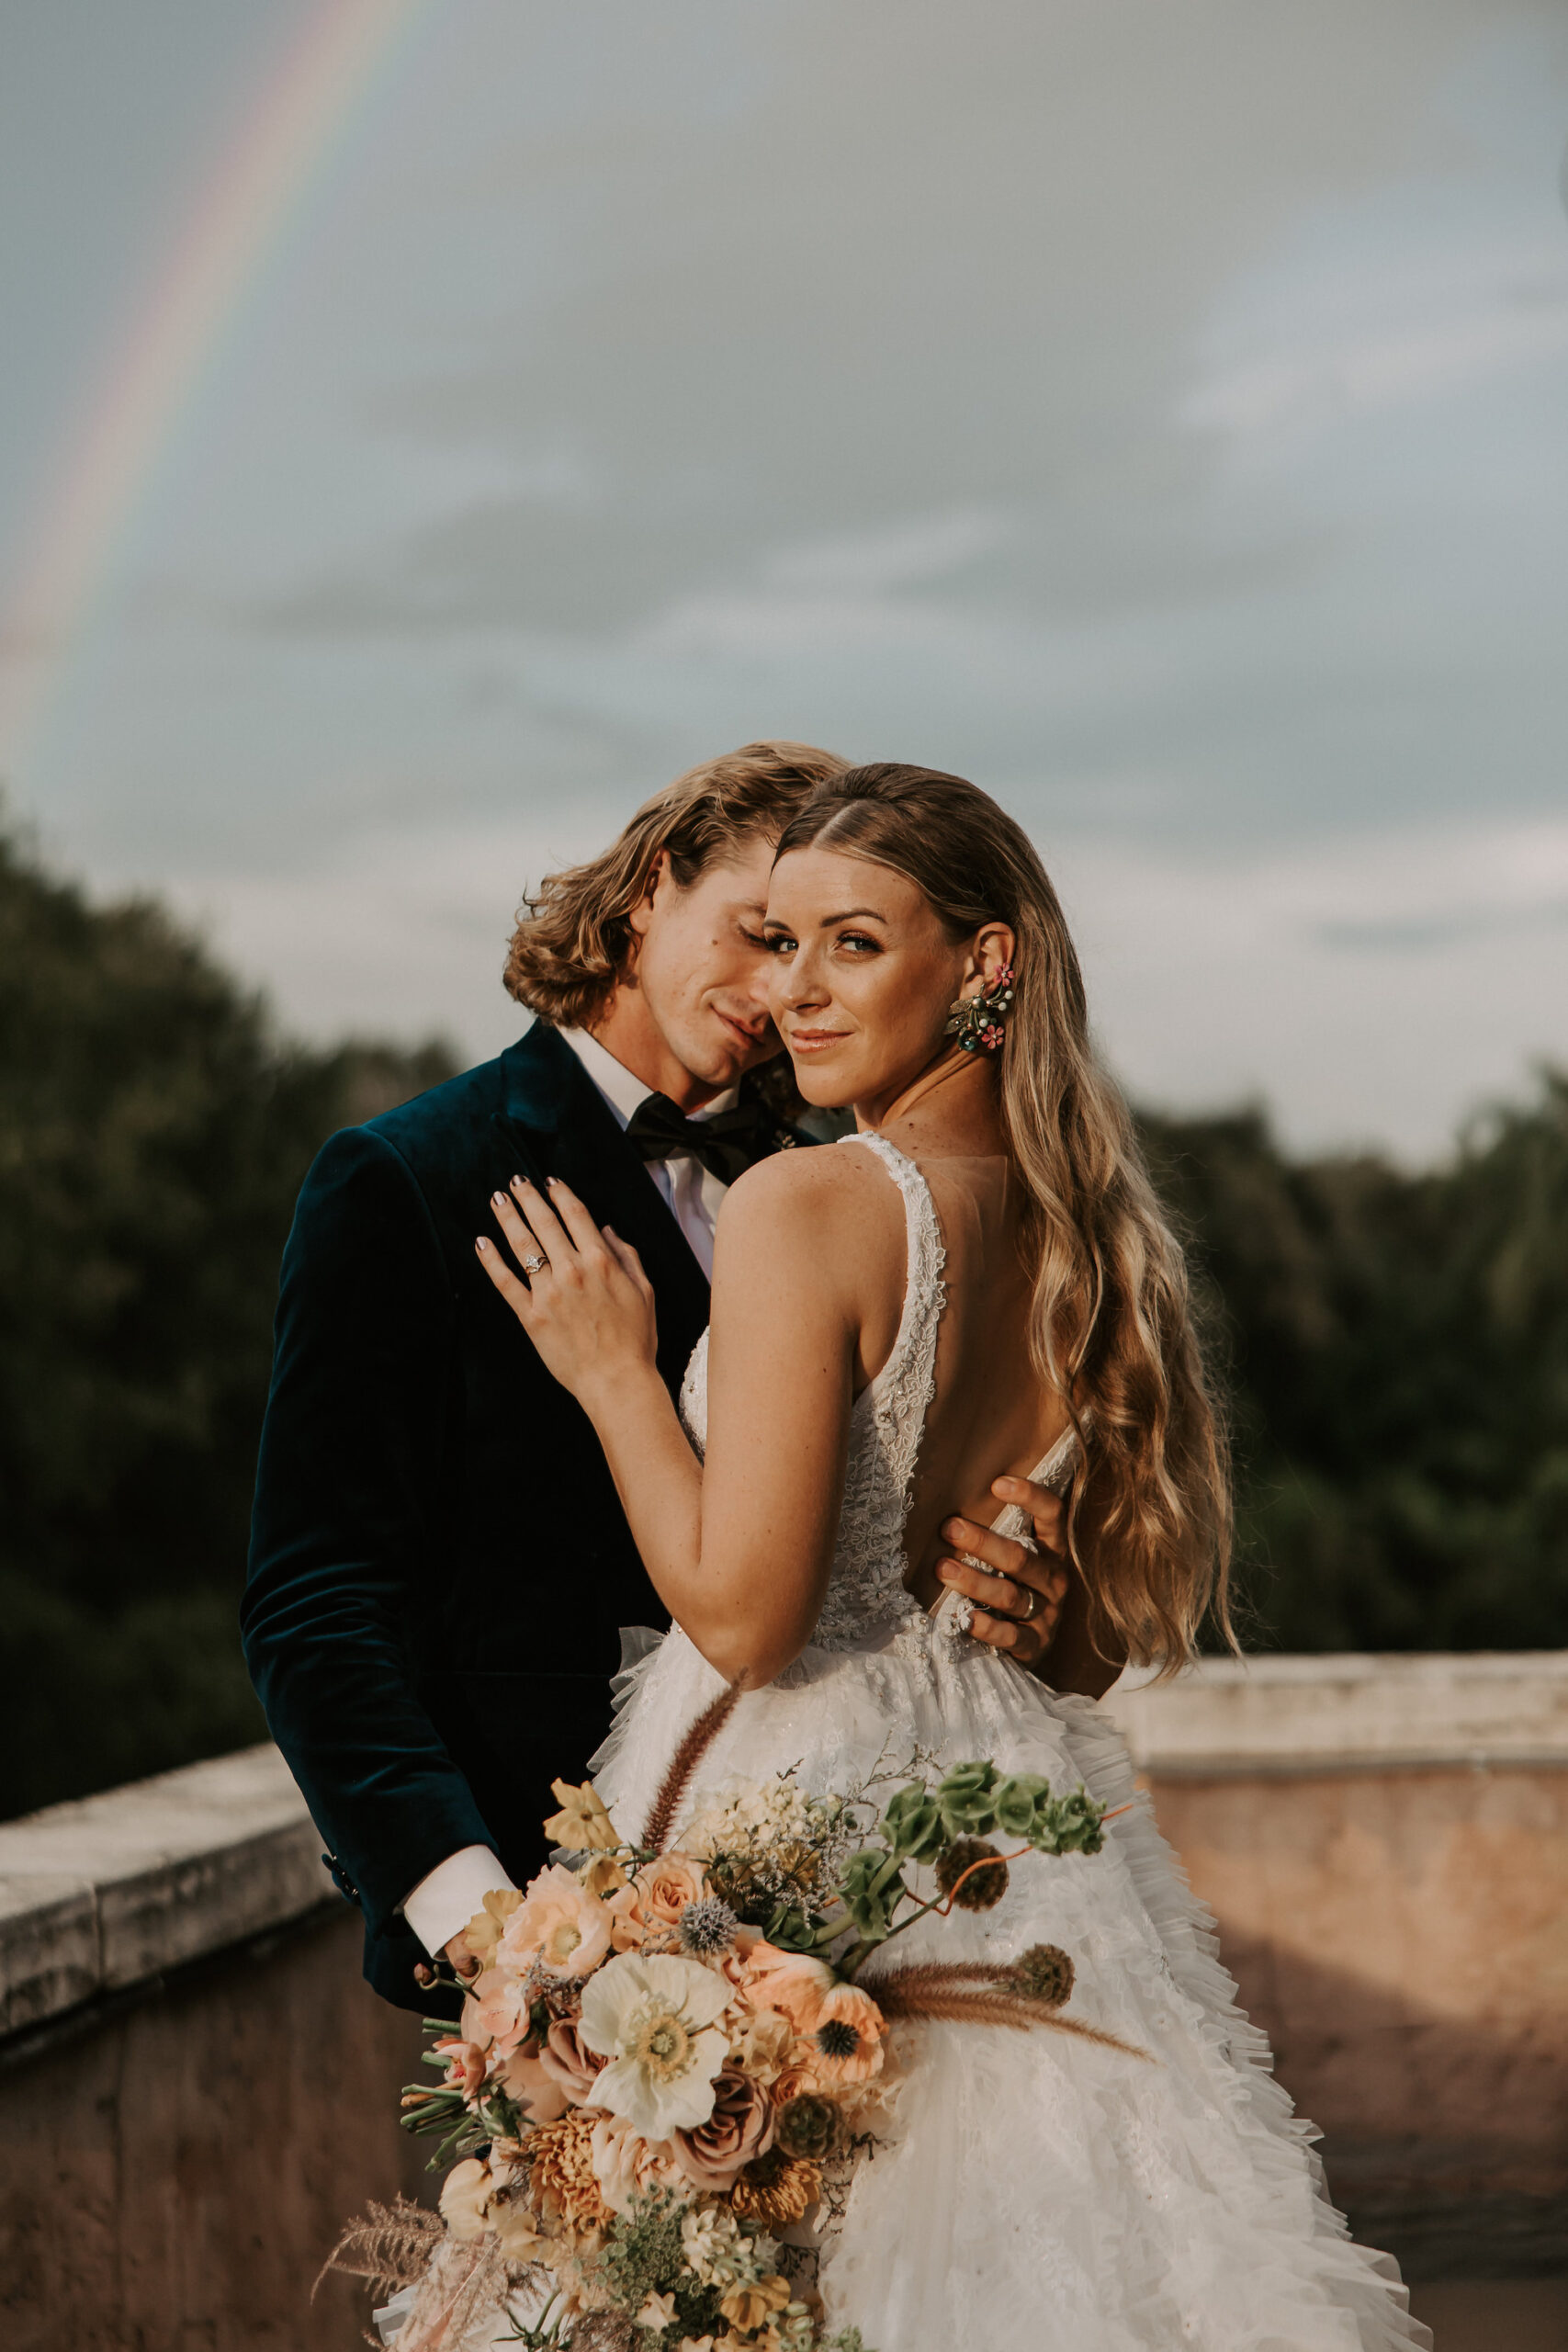 Bridal Wedding Portrait of Bride and Groom Underneath Rainbow | Central Florida Venue Howey Mansion